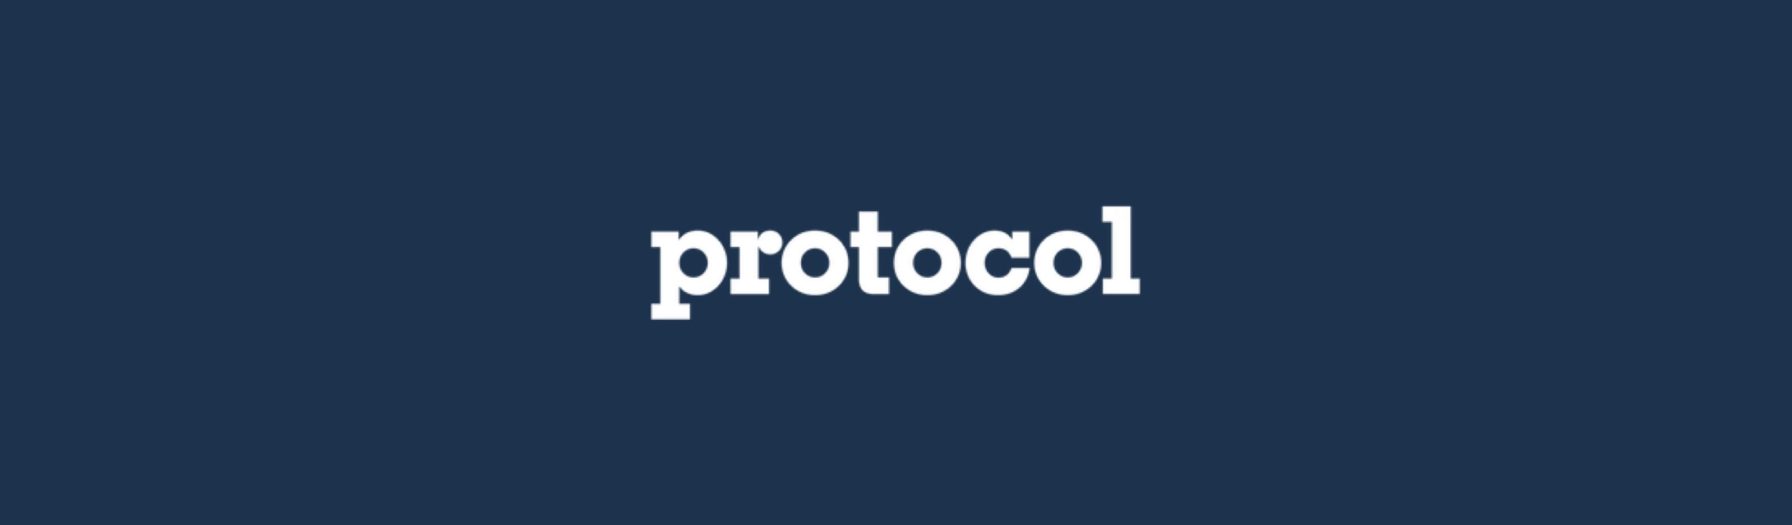  Protocol logo